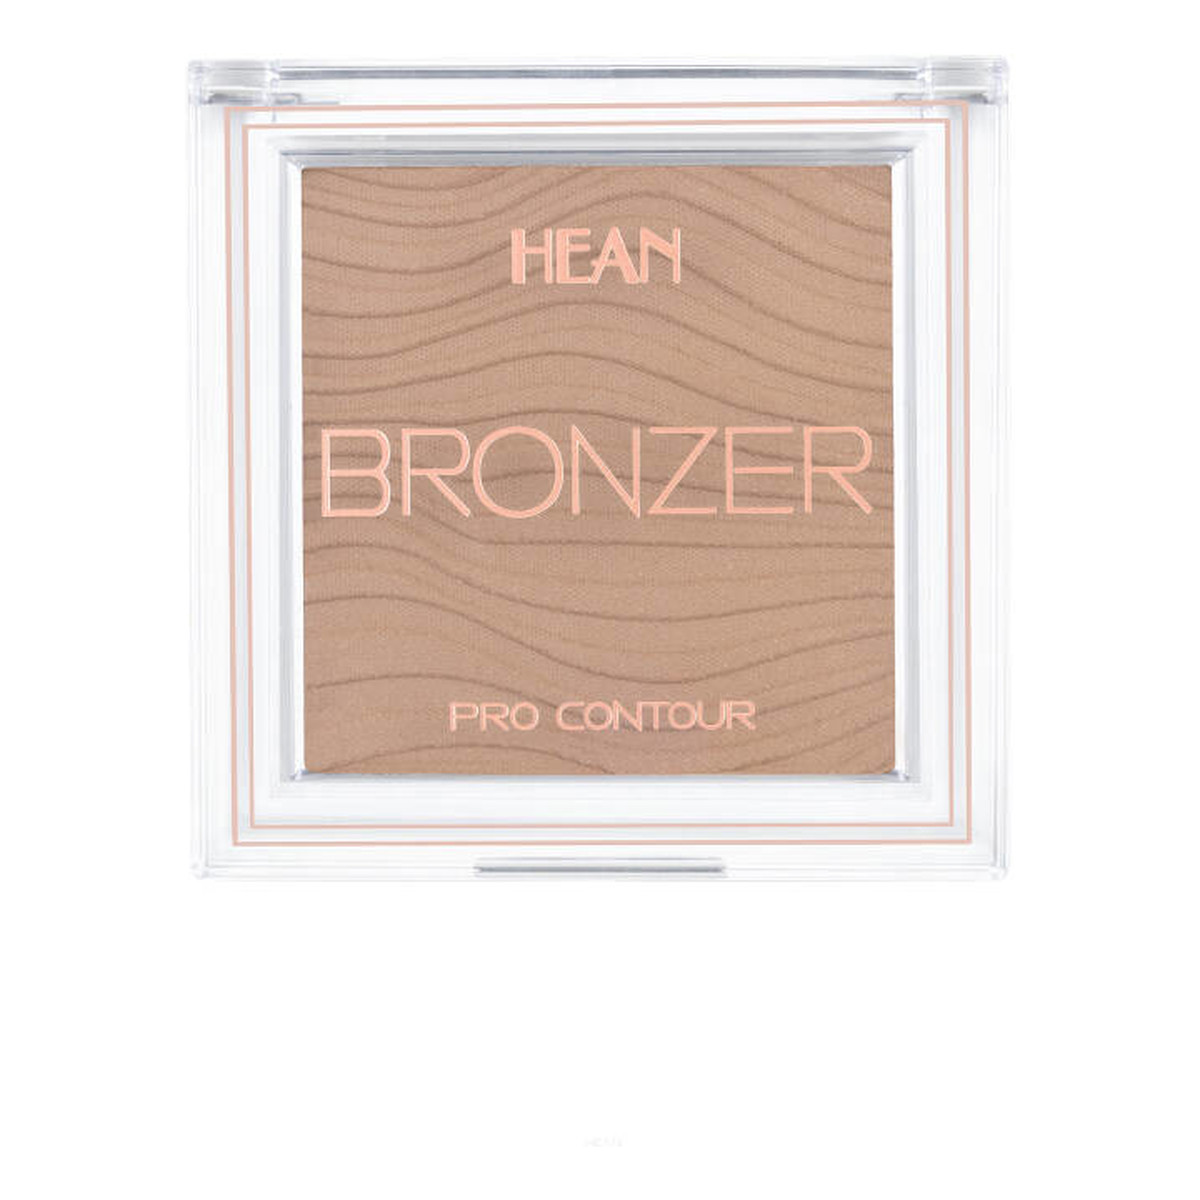 Hean Bronzer Pro-Contour 9g